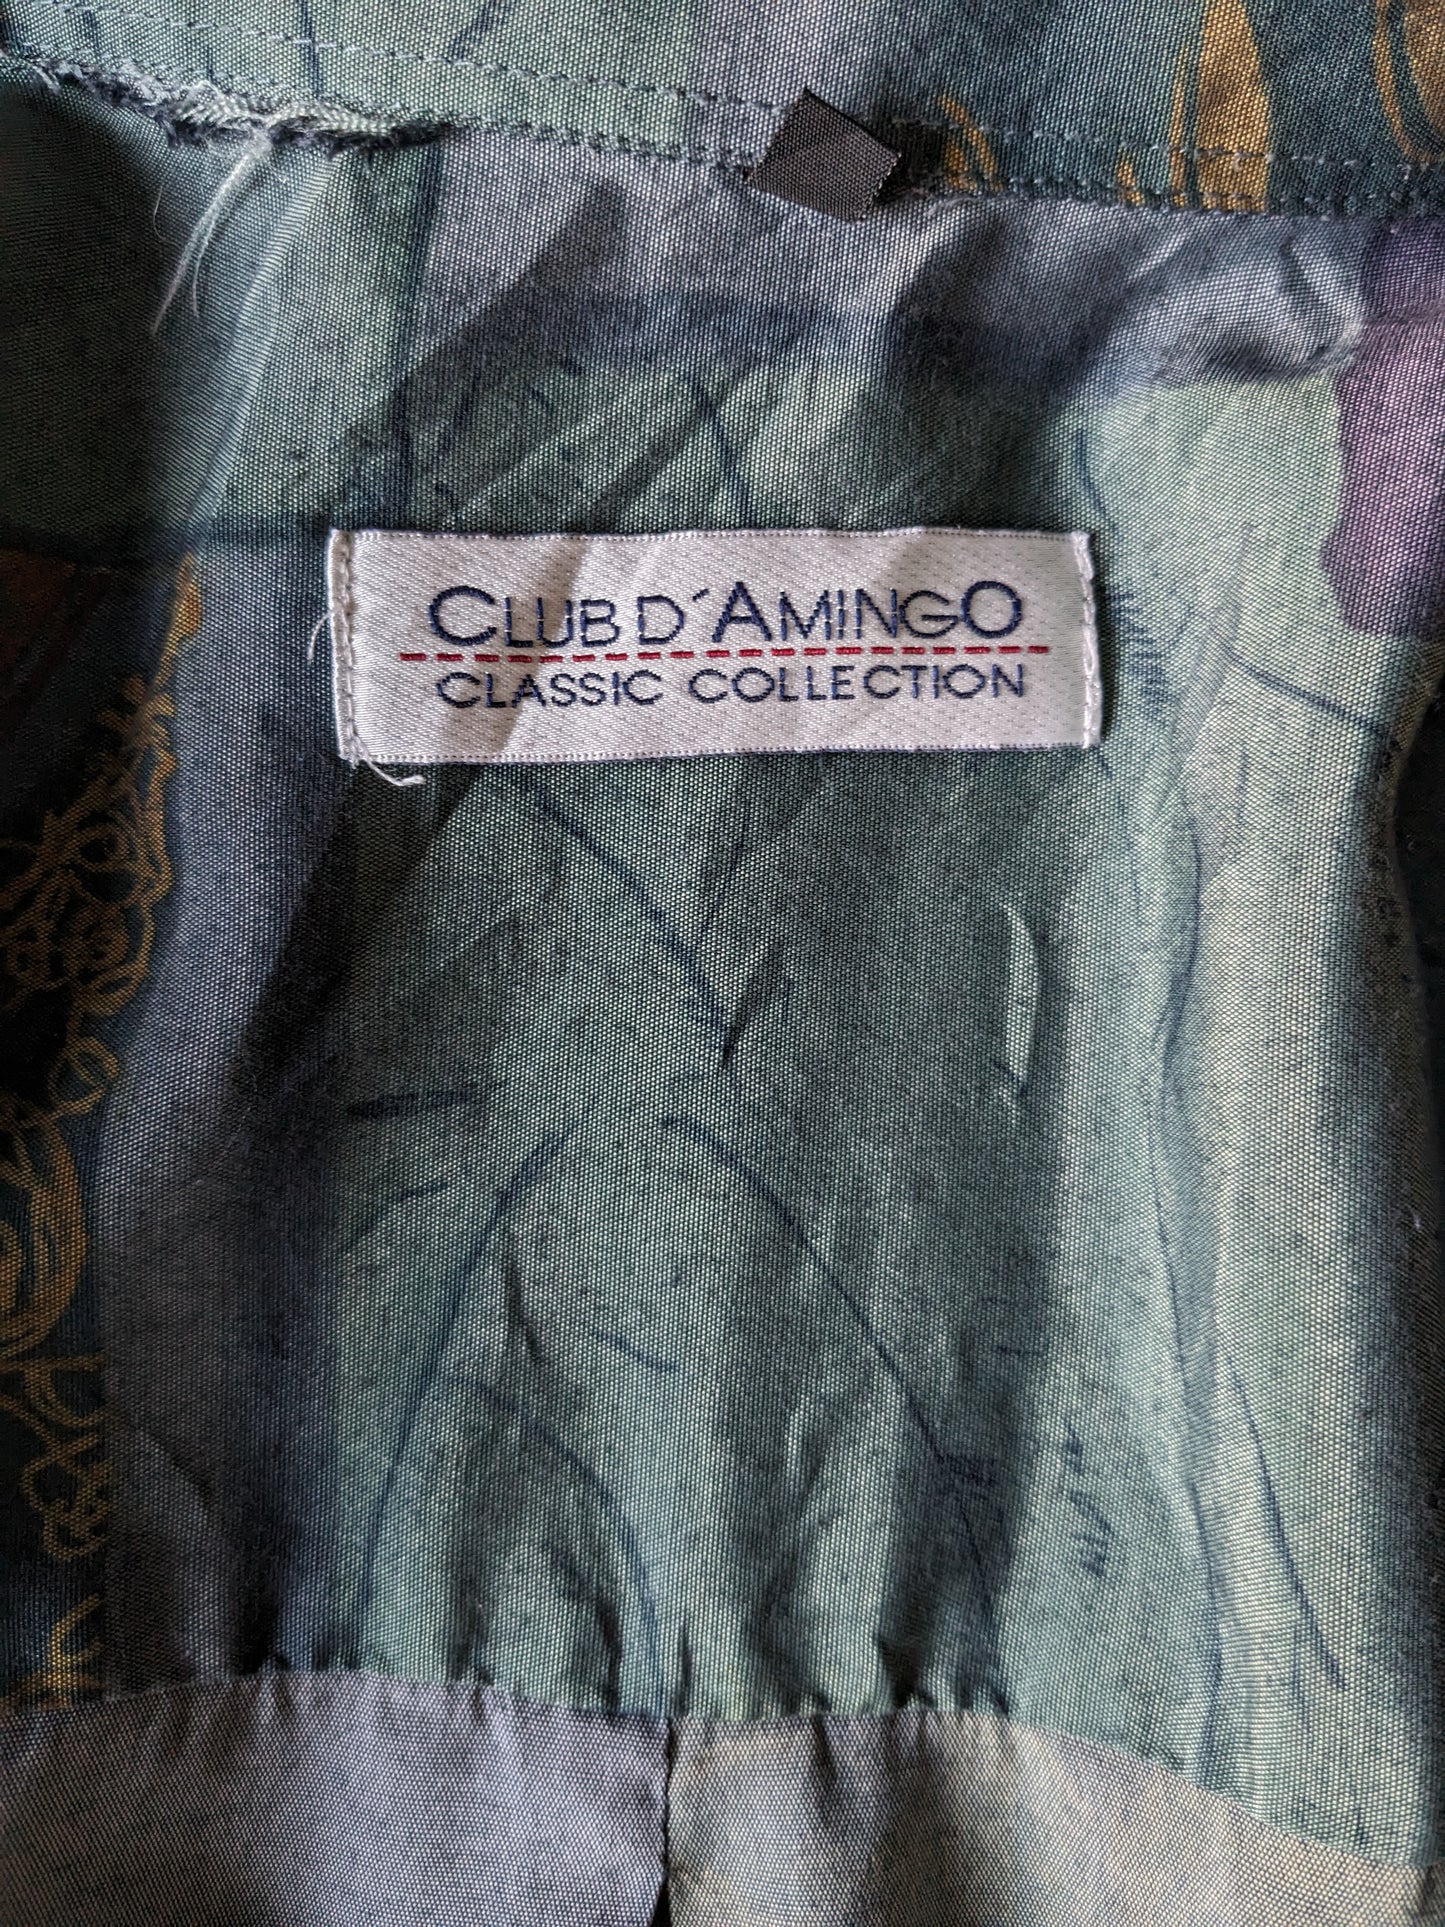 Vintage Club d'Amingo 90's shirt. Gray yellow purple green print. Size XL.